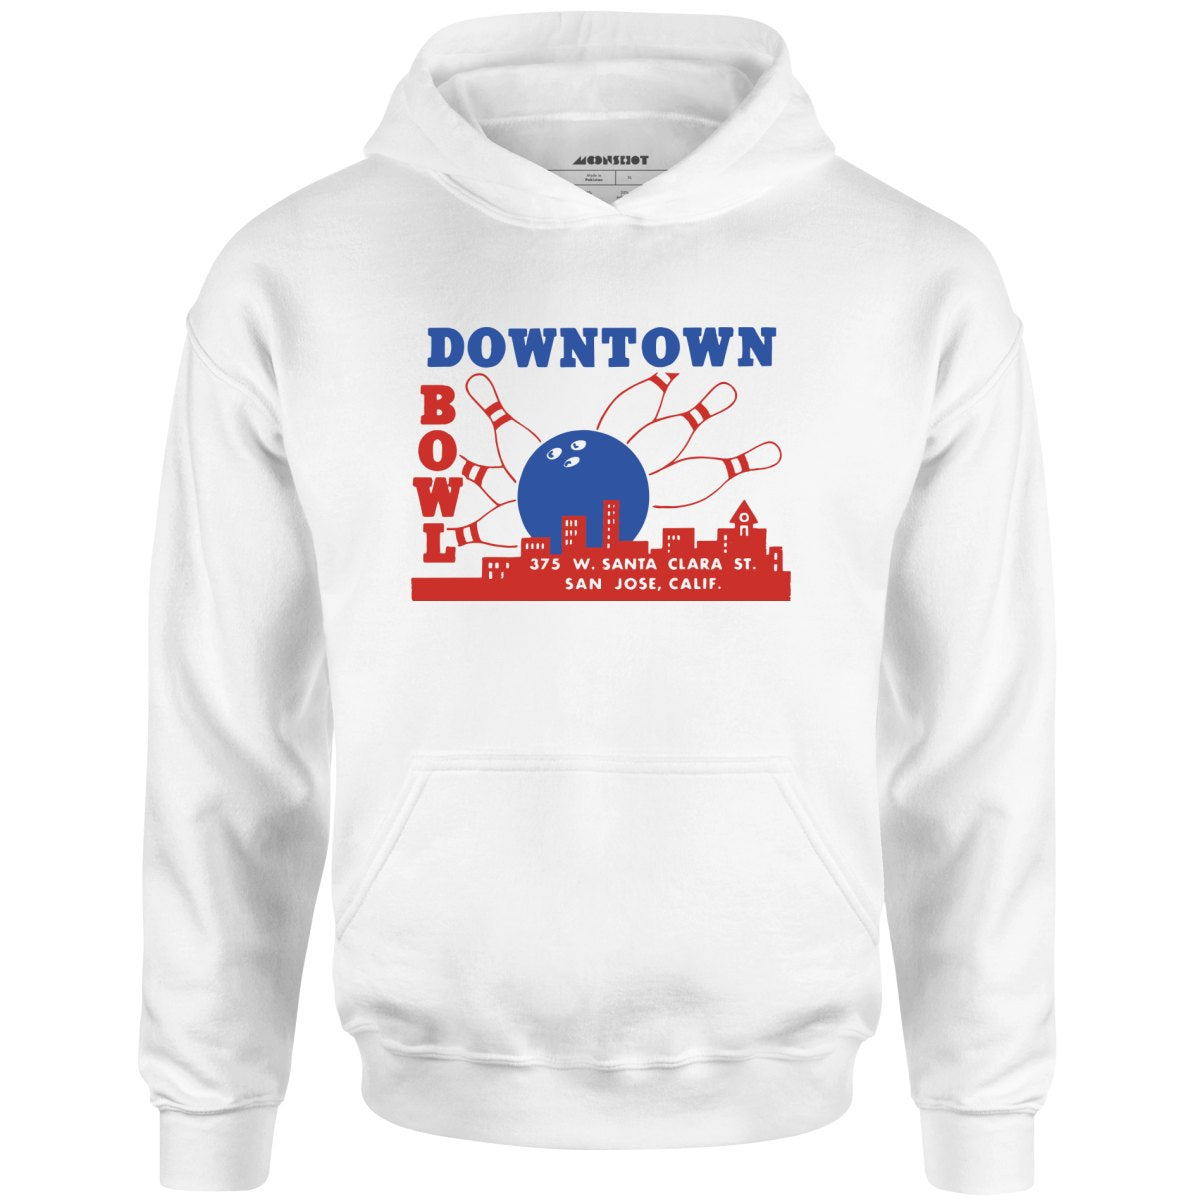 Downtown Bowl - San Jose, CA - Vintage Bowling Alley - Unisex Hoodie